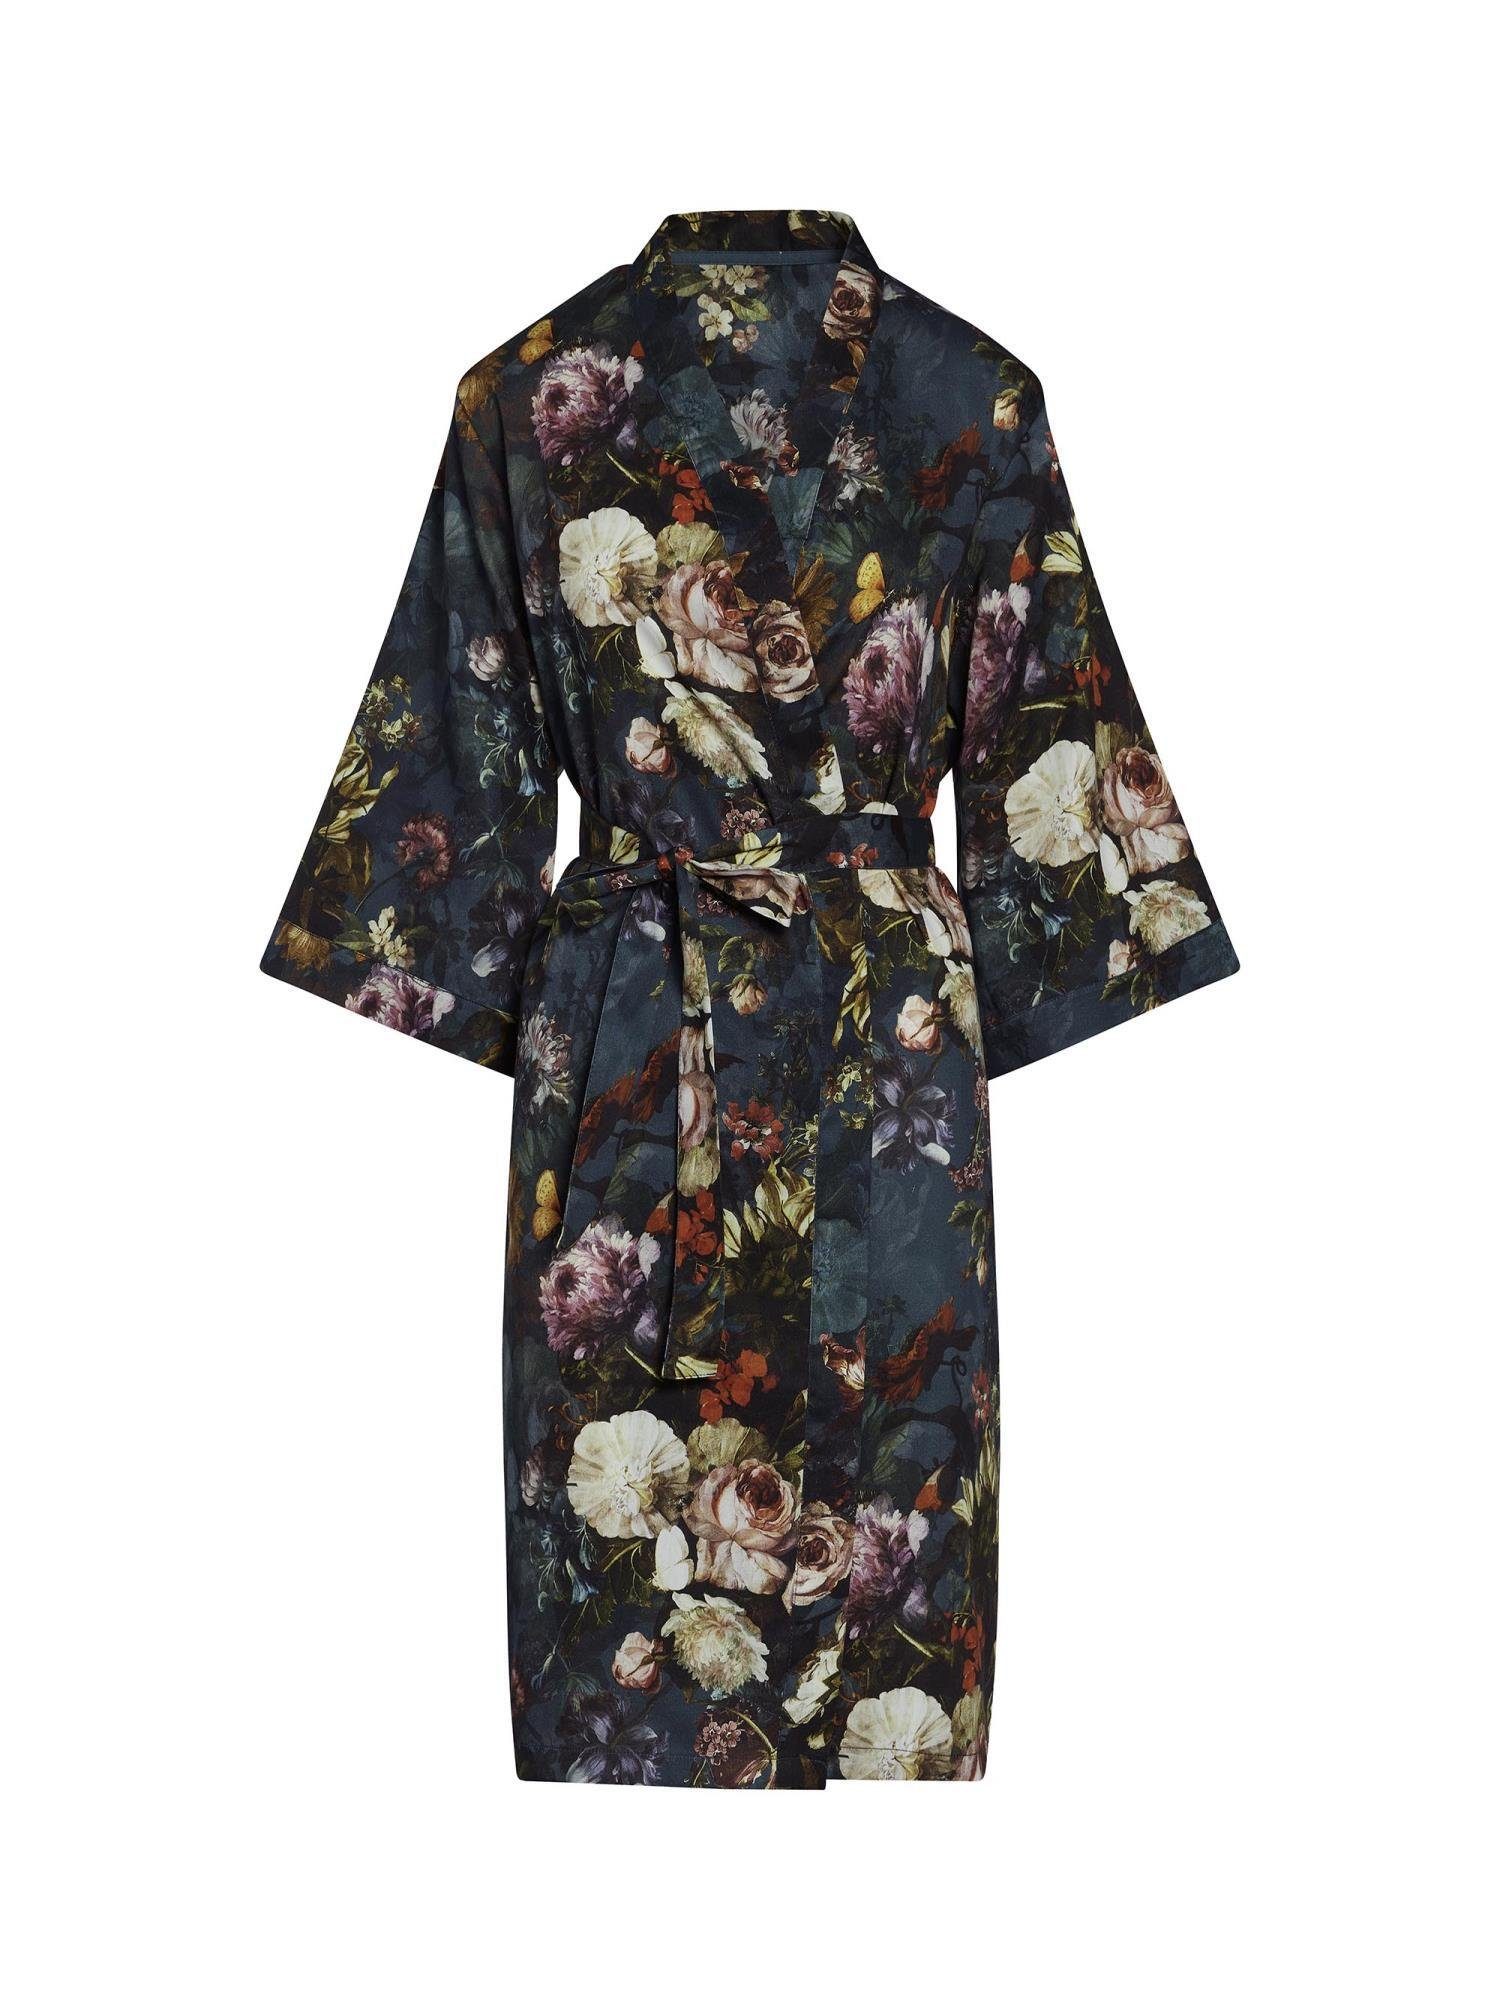 Essenza Kimono sarai karli, Kurzform, Baumwolle, Kimono-Kragen, Gürtel, mit wunderschönem Blumenprin deep sea blue